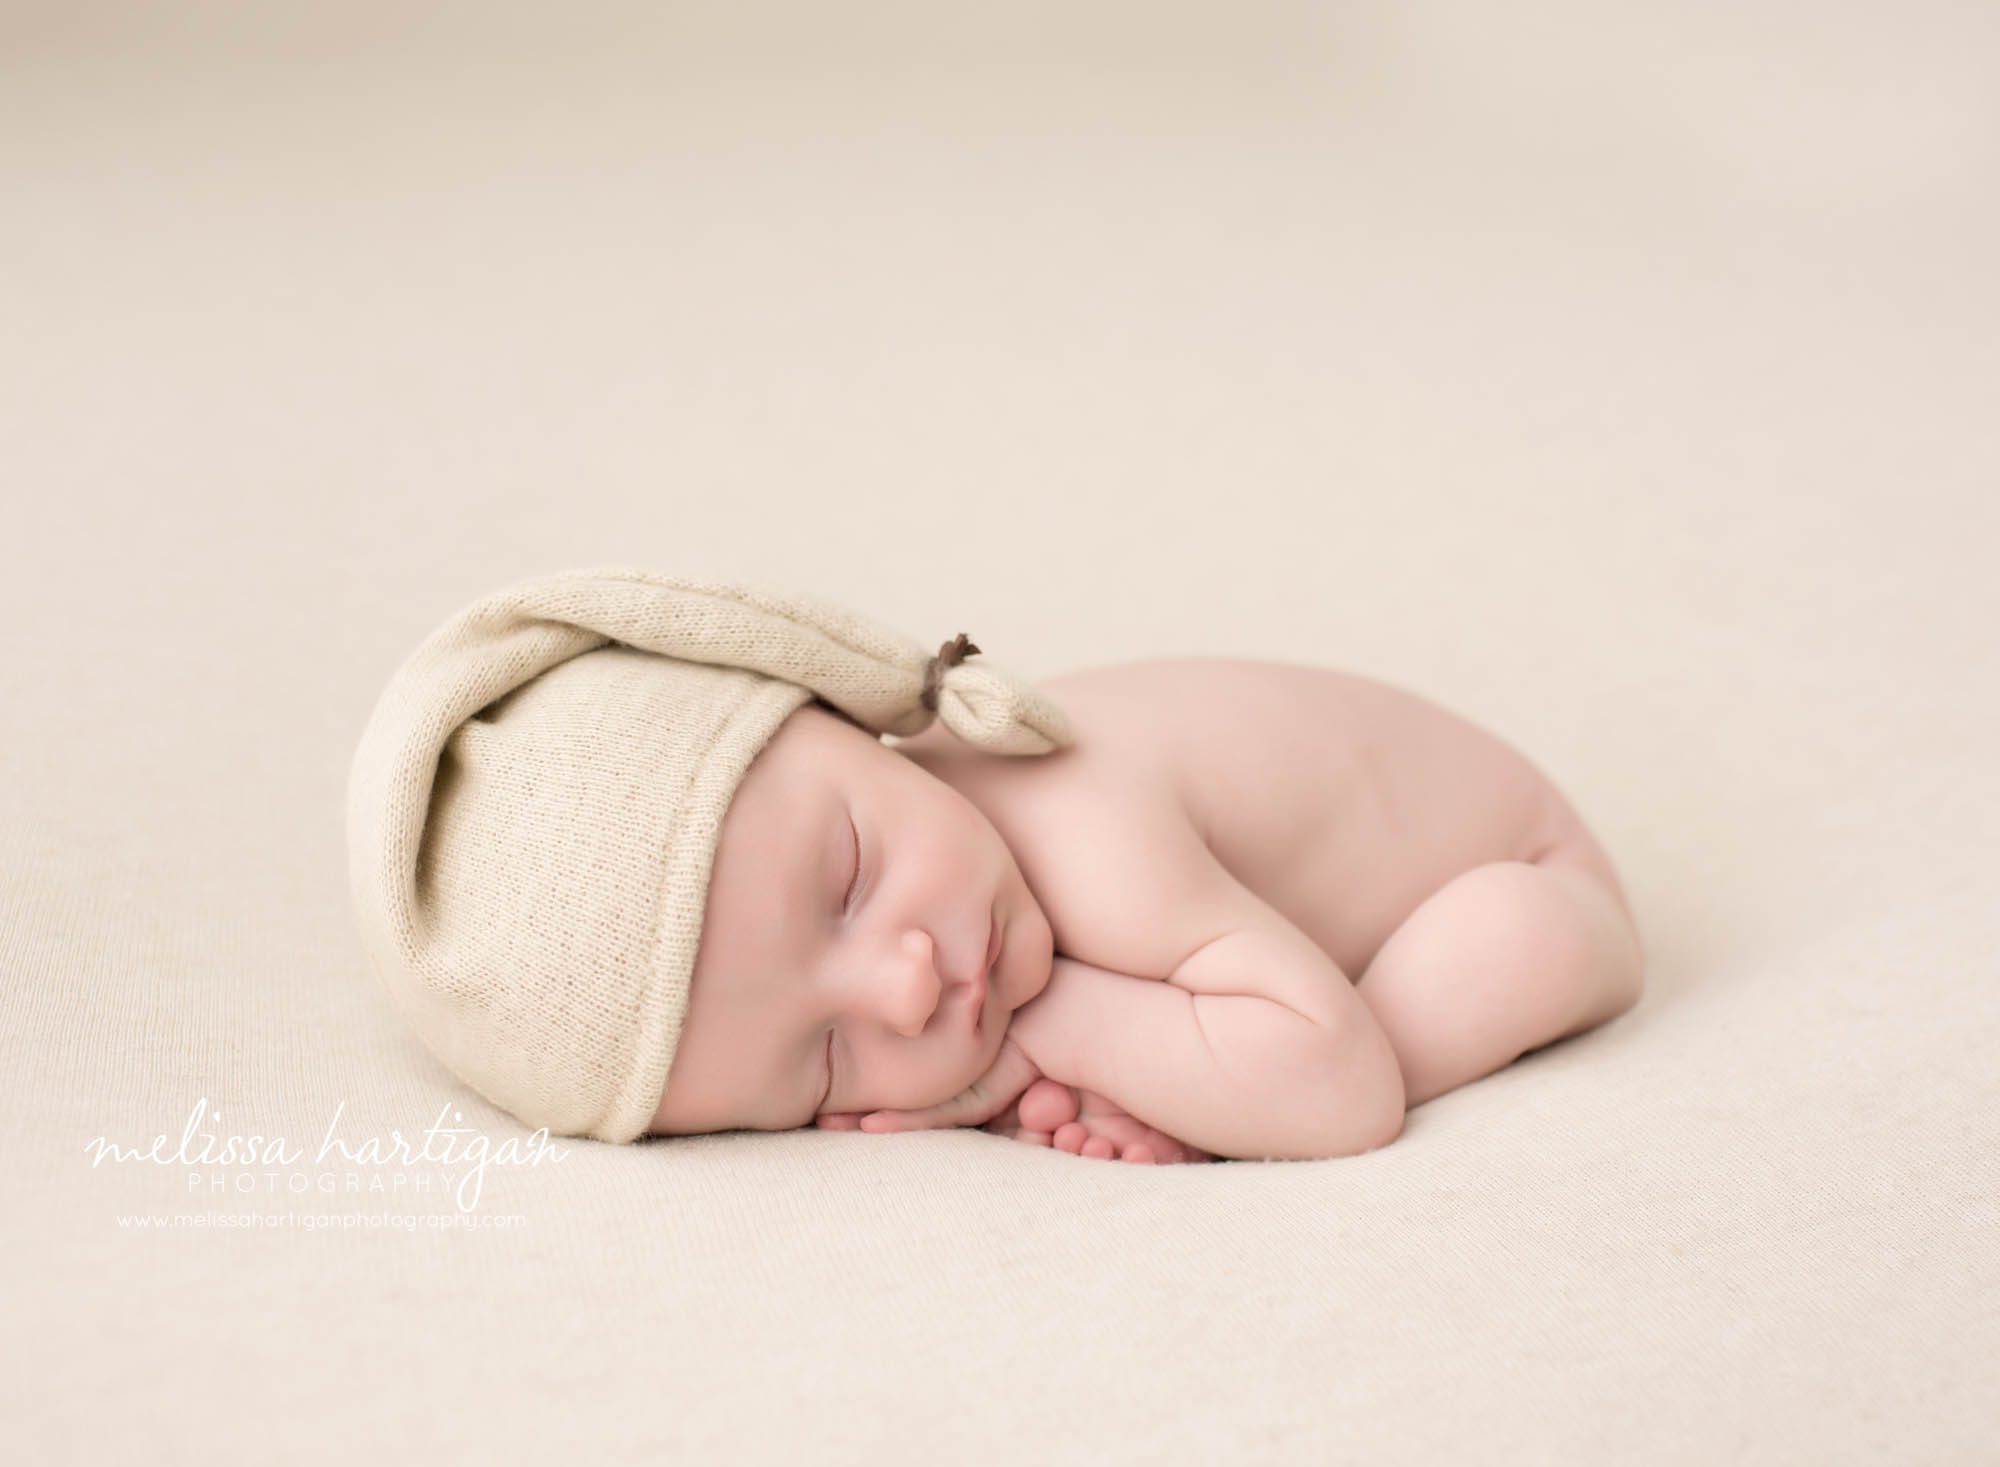 Melissa Hartigan Photography CT Newborn Photographer Stafford baby boy sleeping wearing cream knit hat on cream blanket